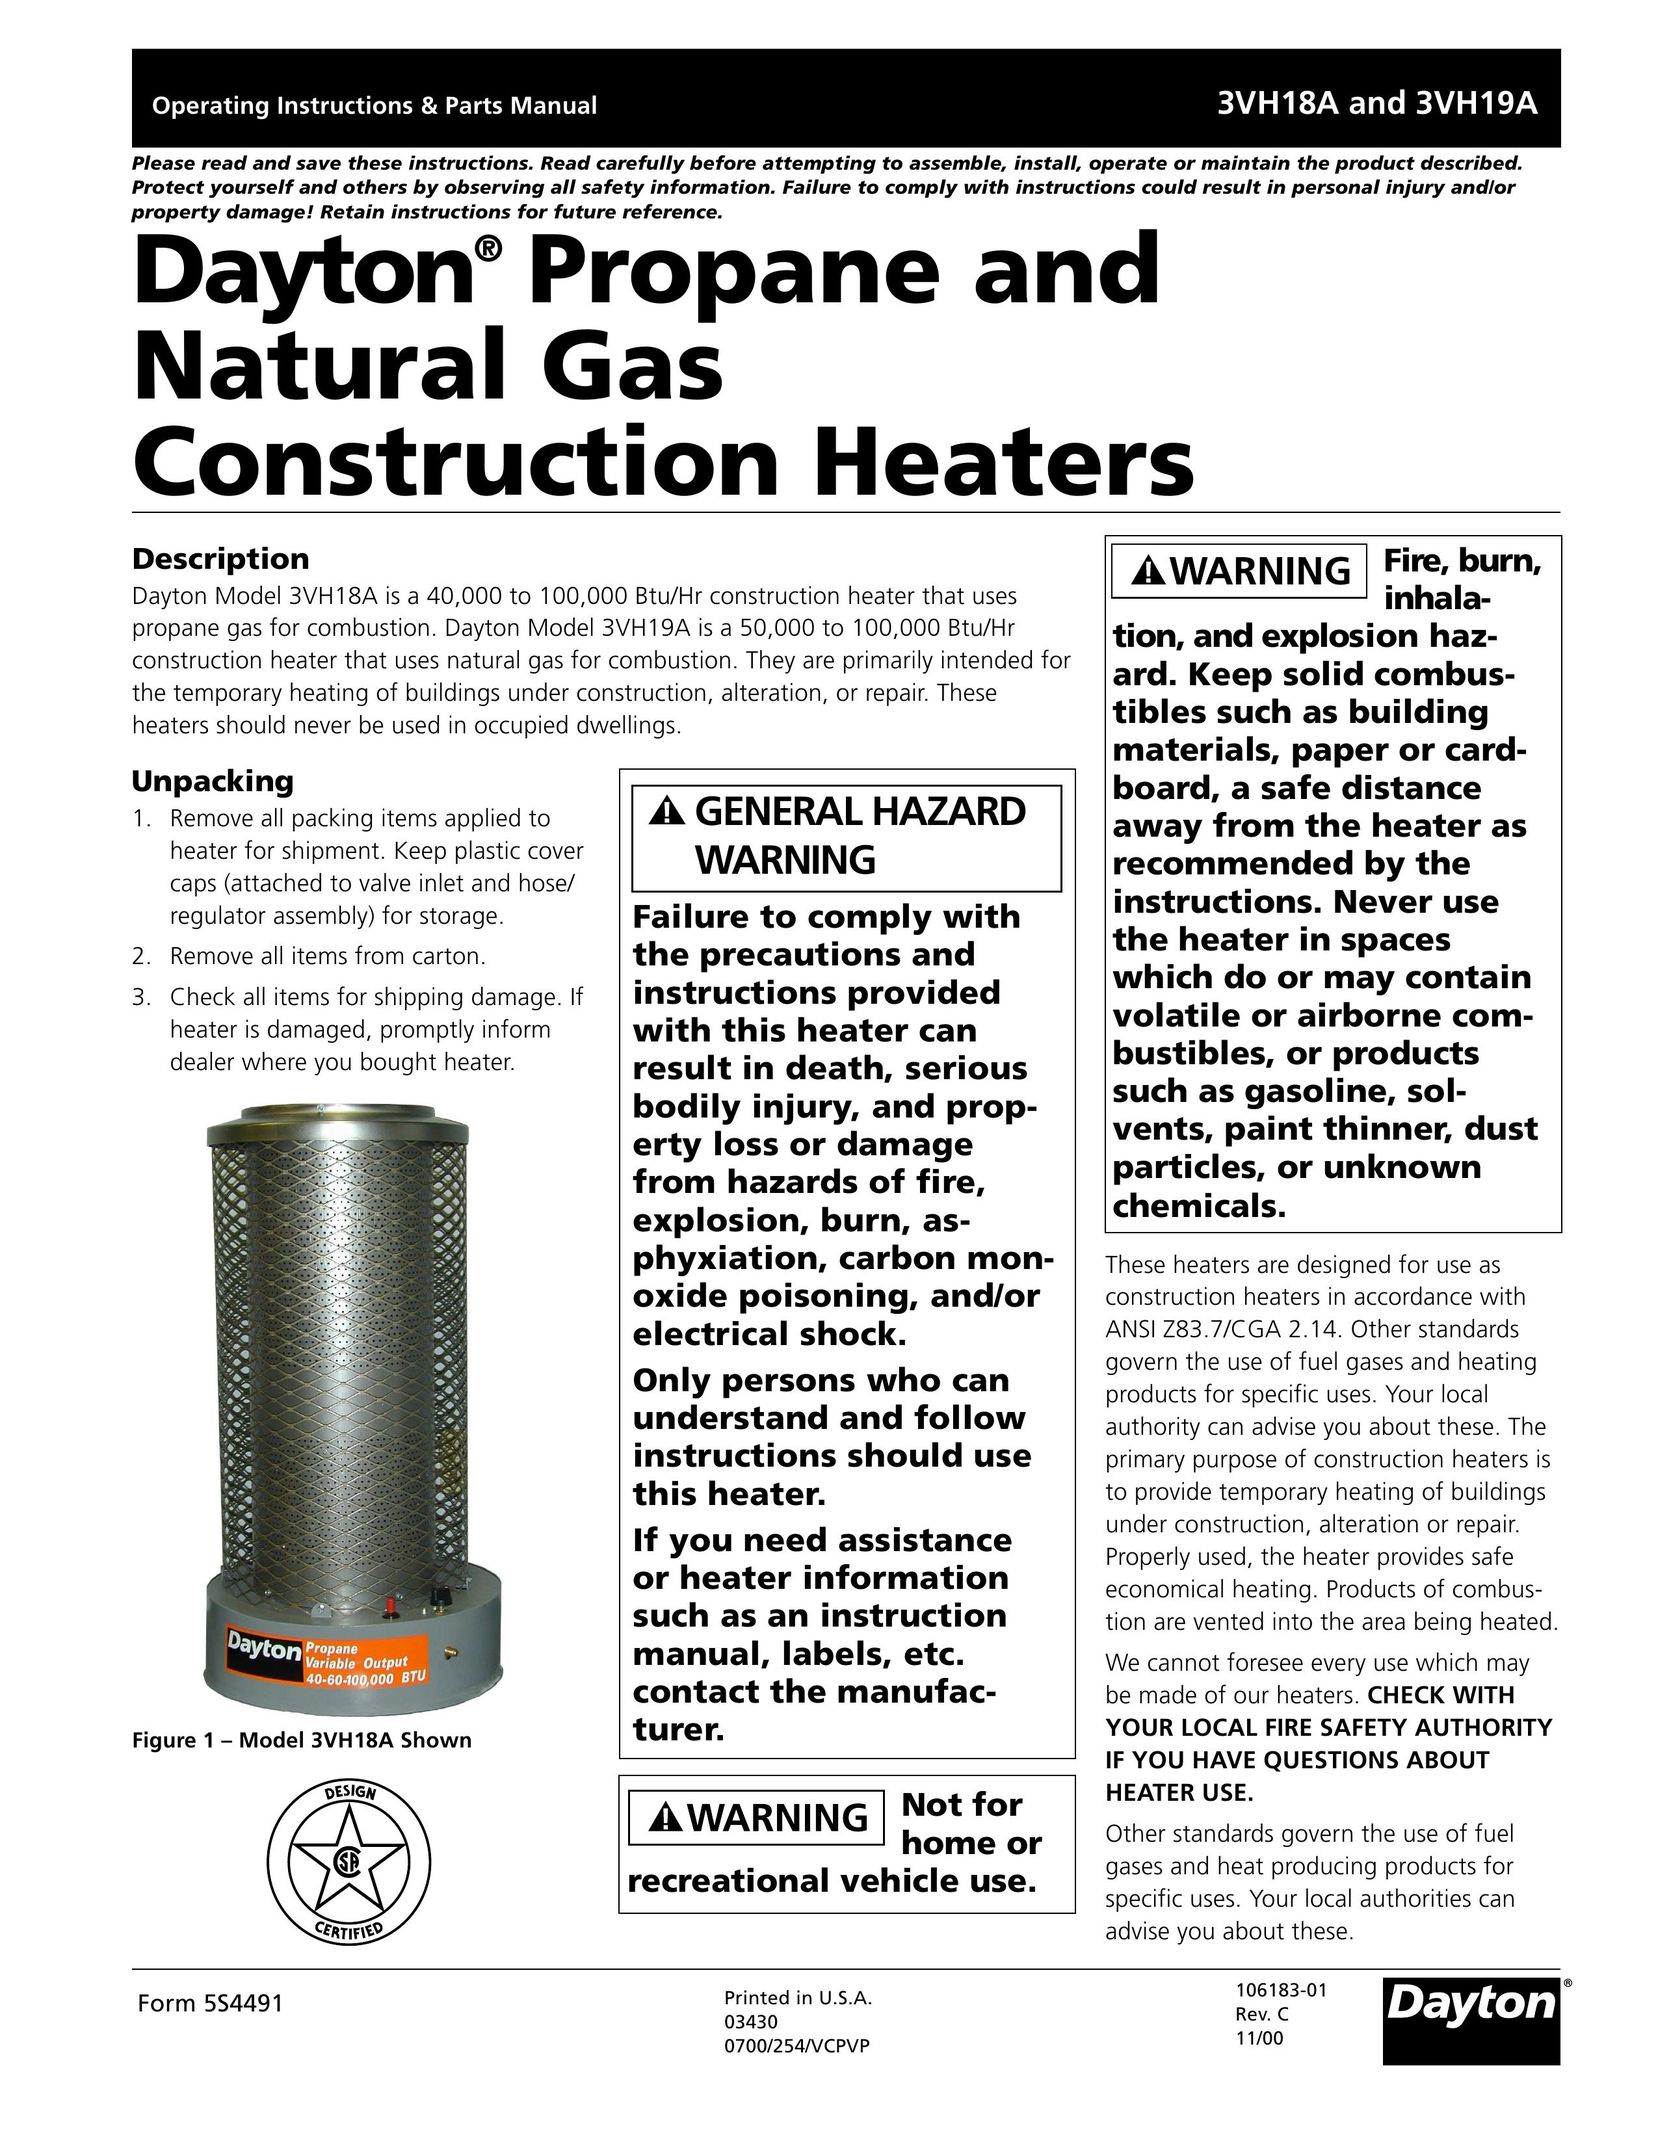 Dayton 3VH19A Gas Heater User Manual